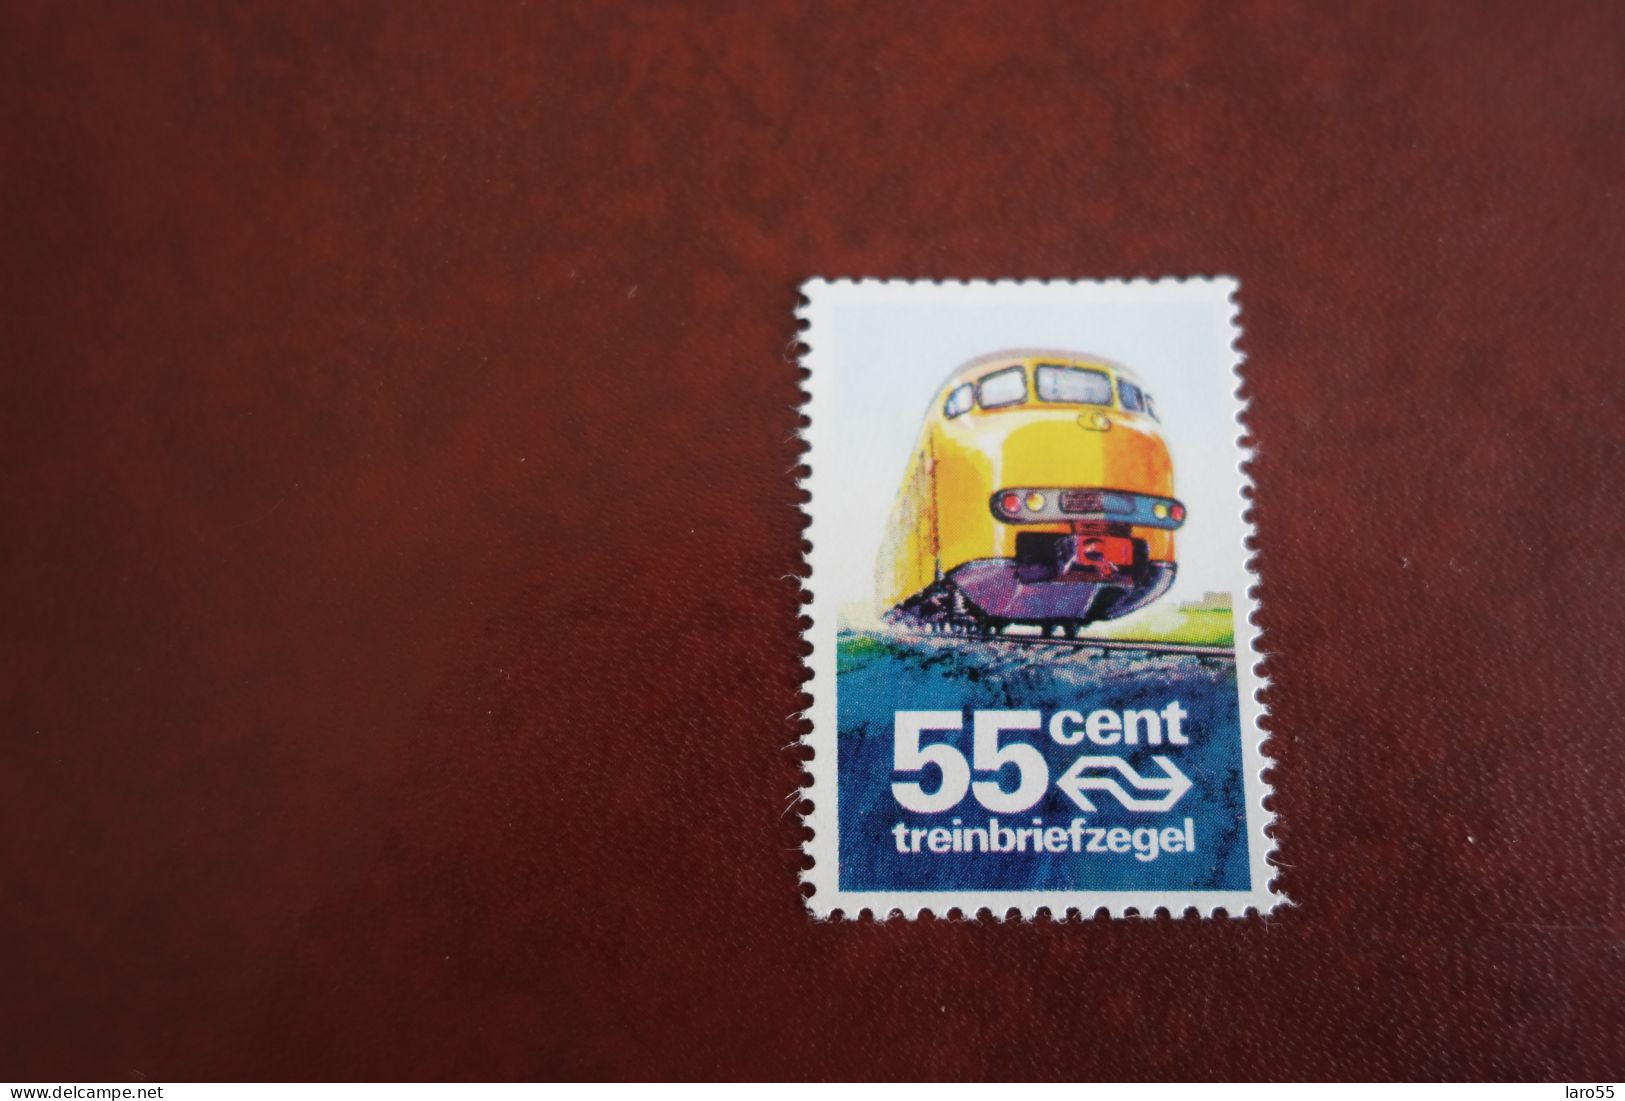 Treinbriefzegel 55 Cent - Spoorwegzegels